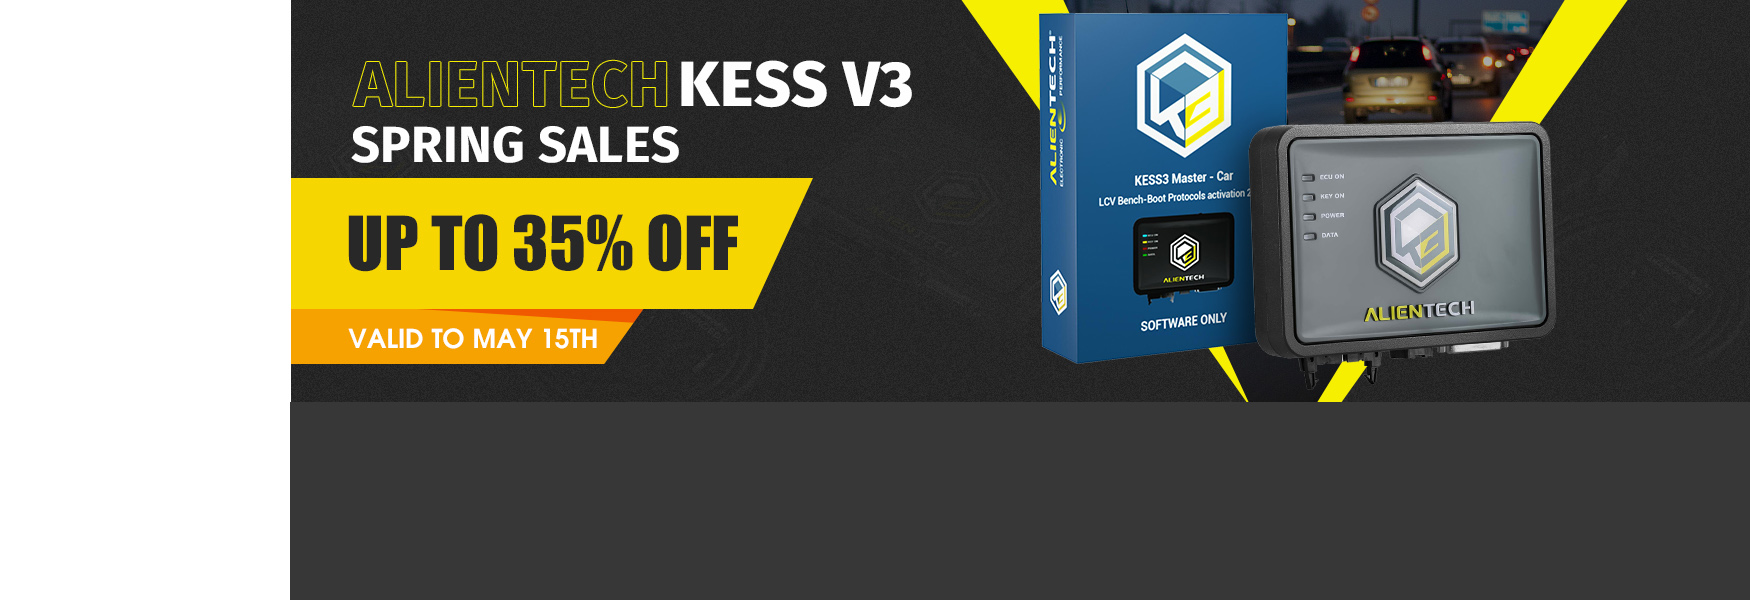 kess v3 promotion price